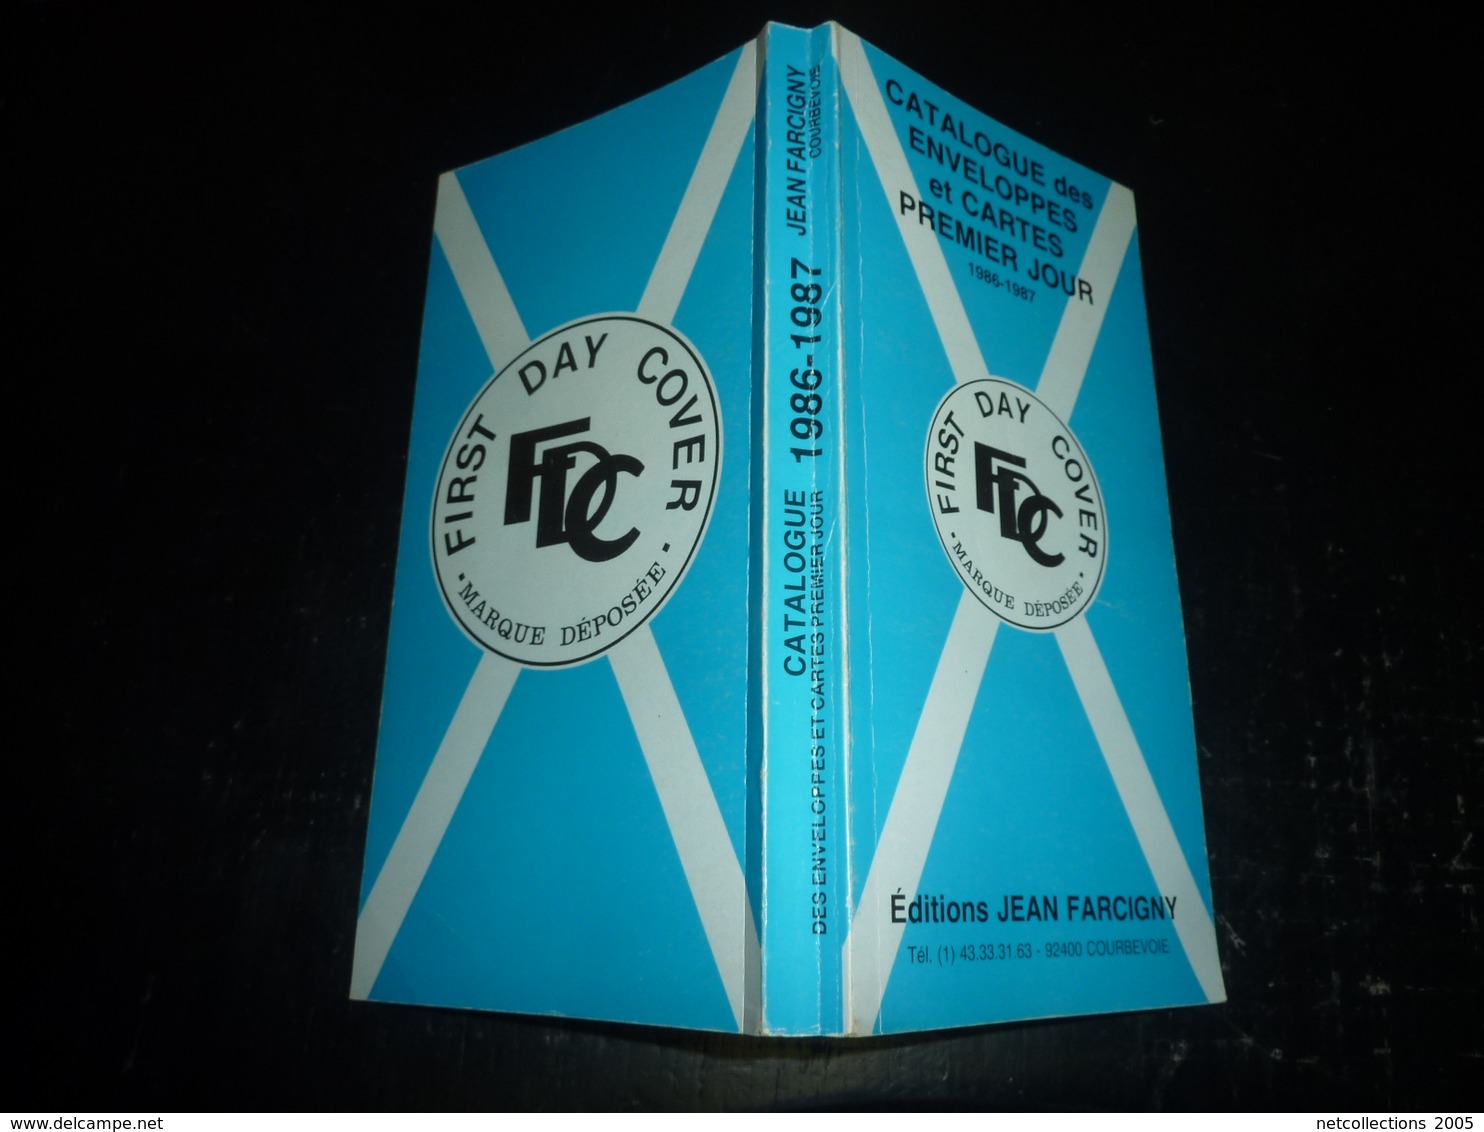 CATALOGUE DES ENVELOPPES ET CARTES PREMIER JOUR 1986-1987 FIRST DAY COVER EDITIONS JEAN FARCIGNY - Topics